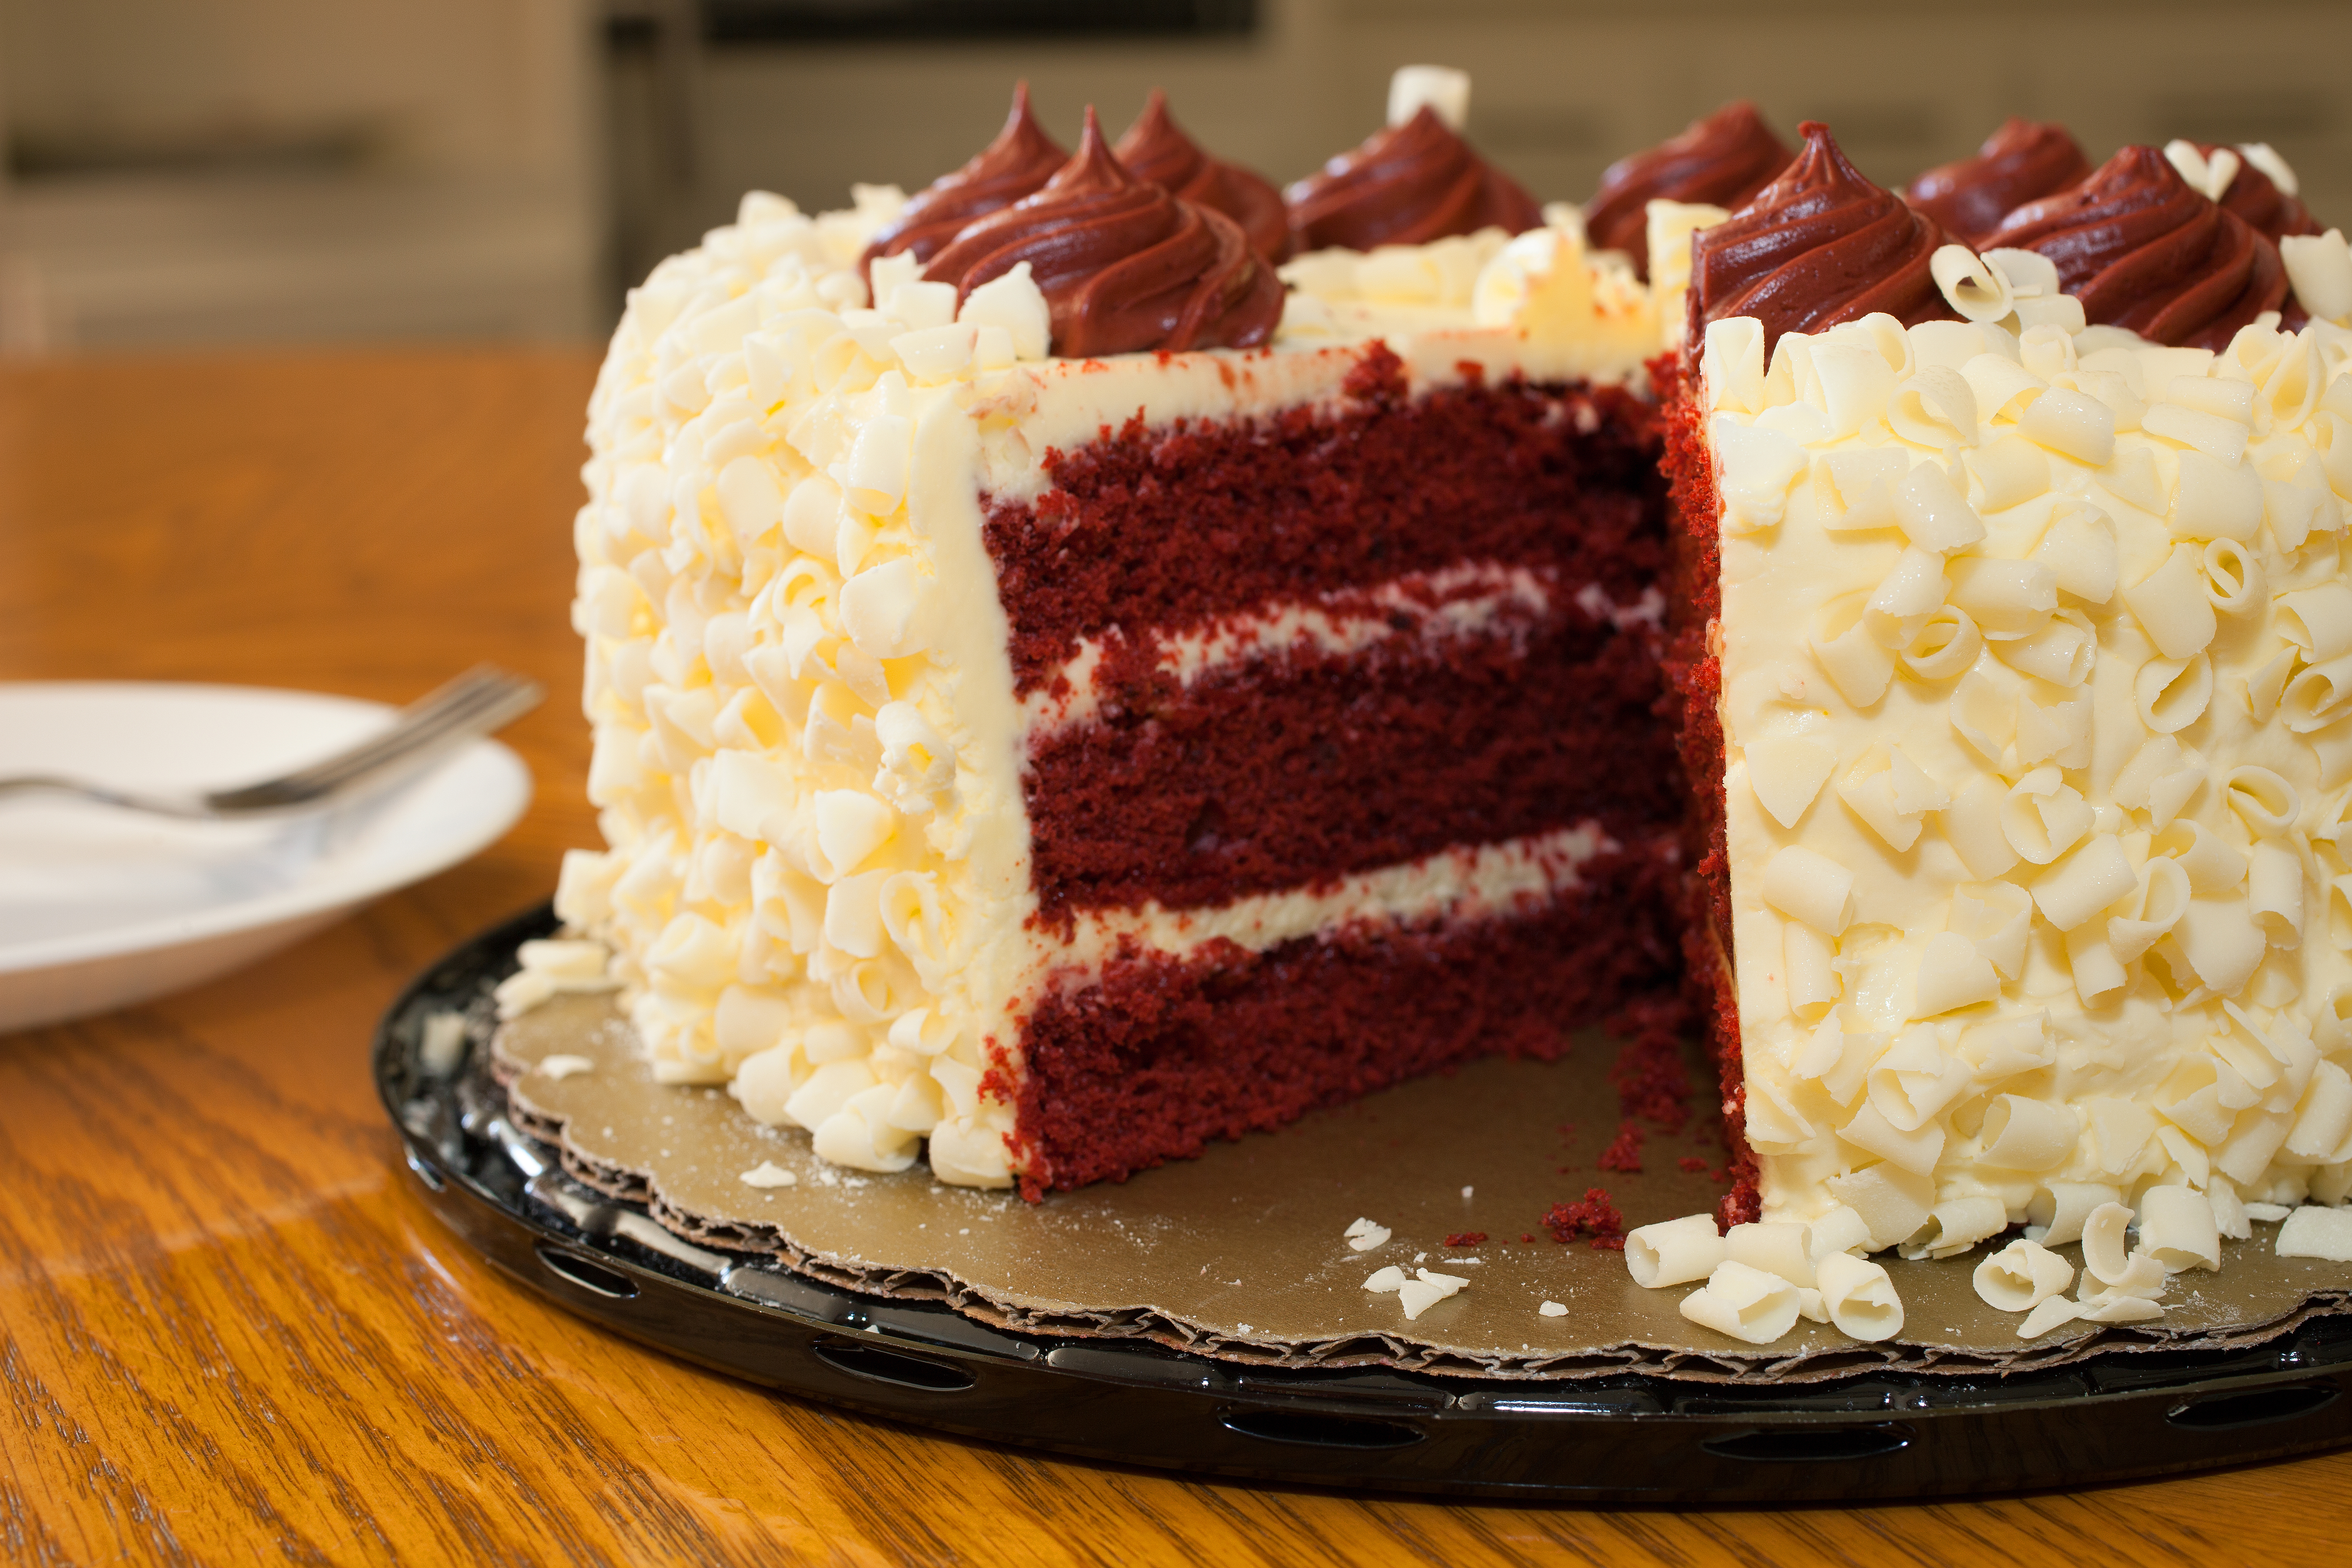 A red velvet cake on the table | Source: Shutterstock